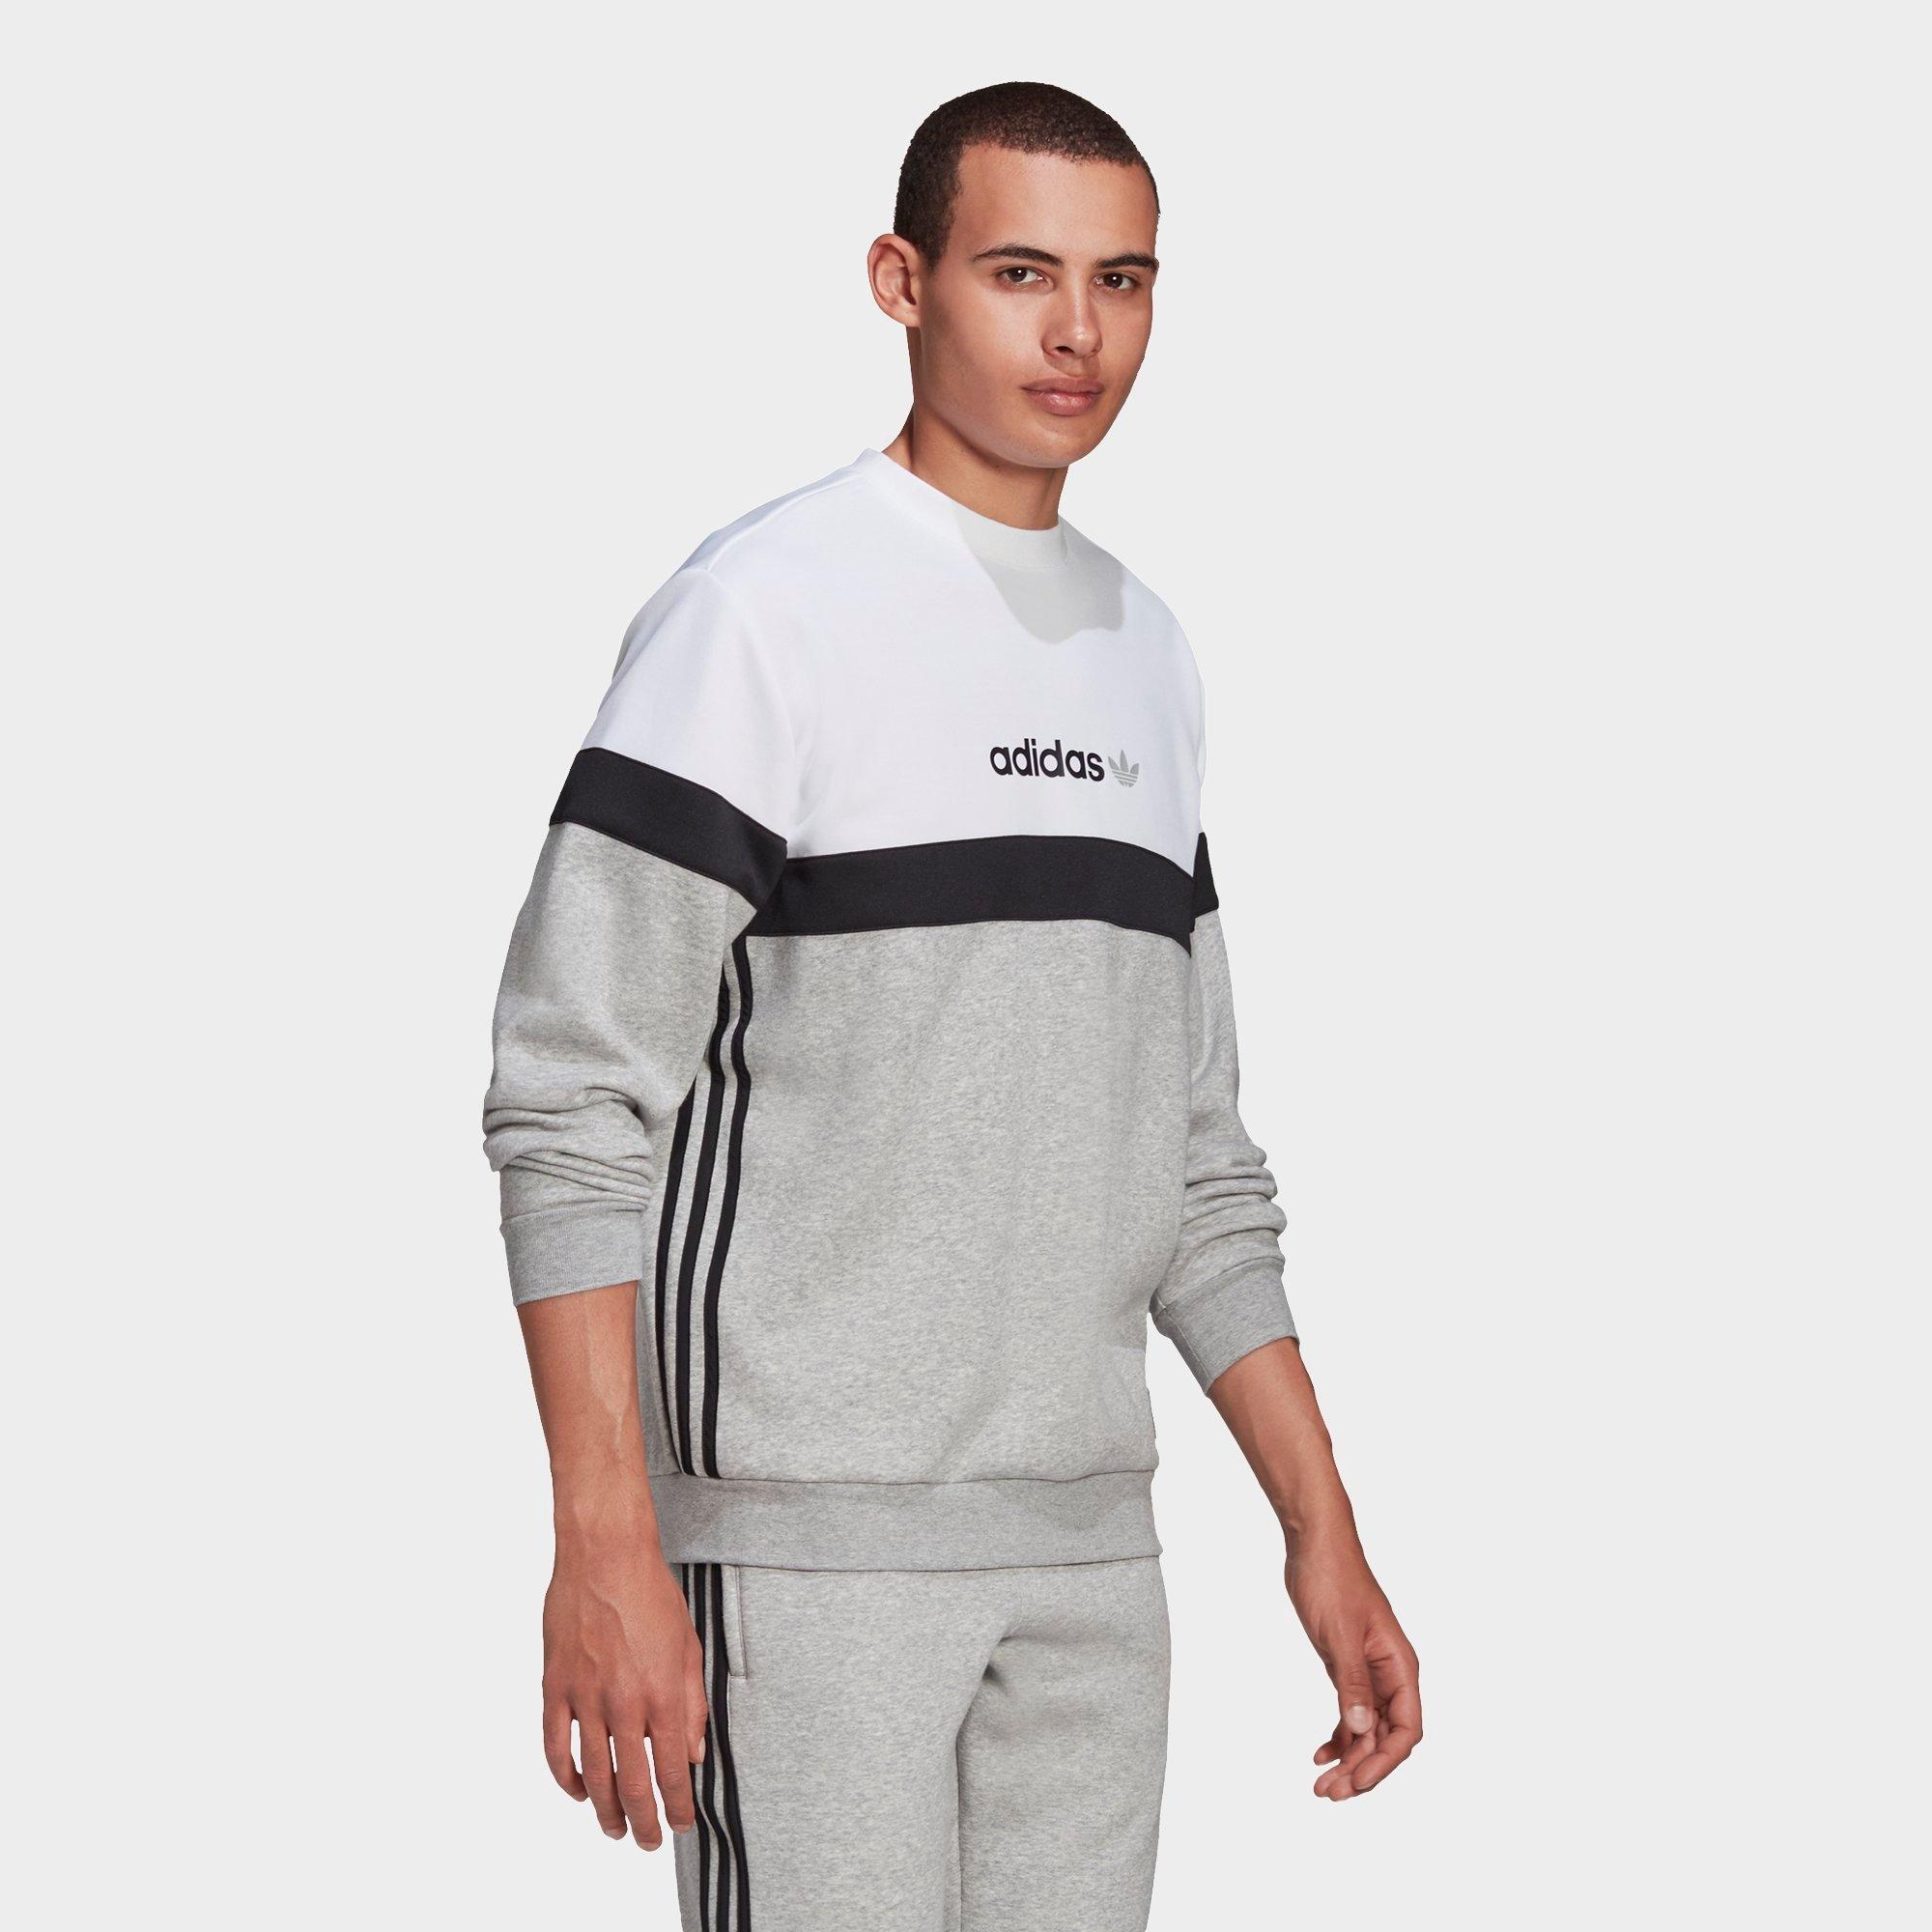 adidas originals linear fleece crew sweatshirt